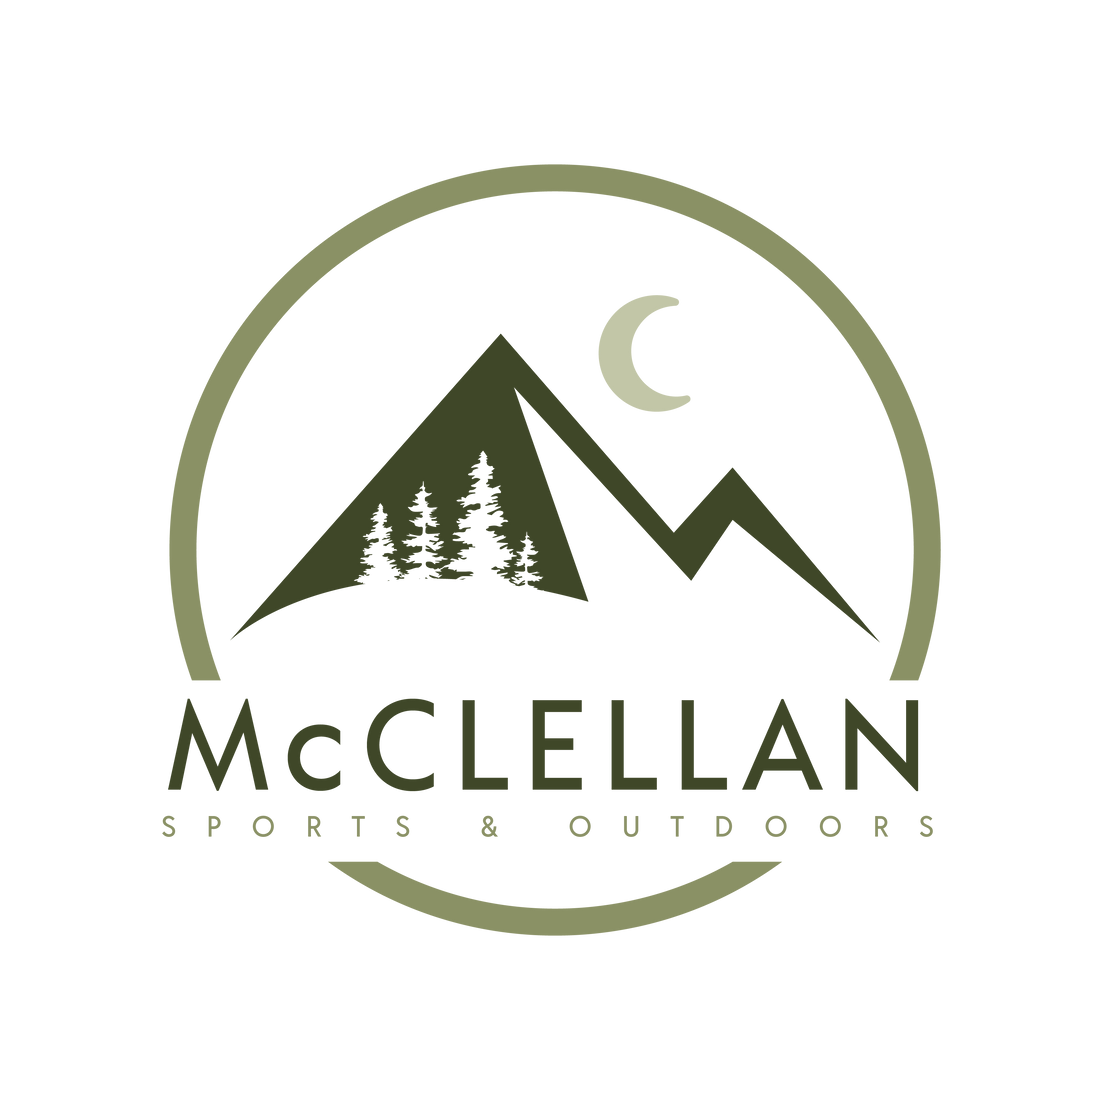 McClellan Sports & Outdoors